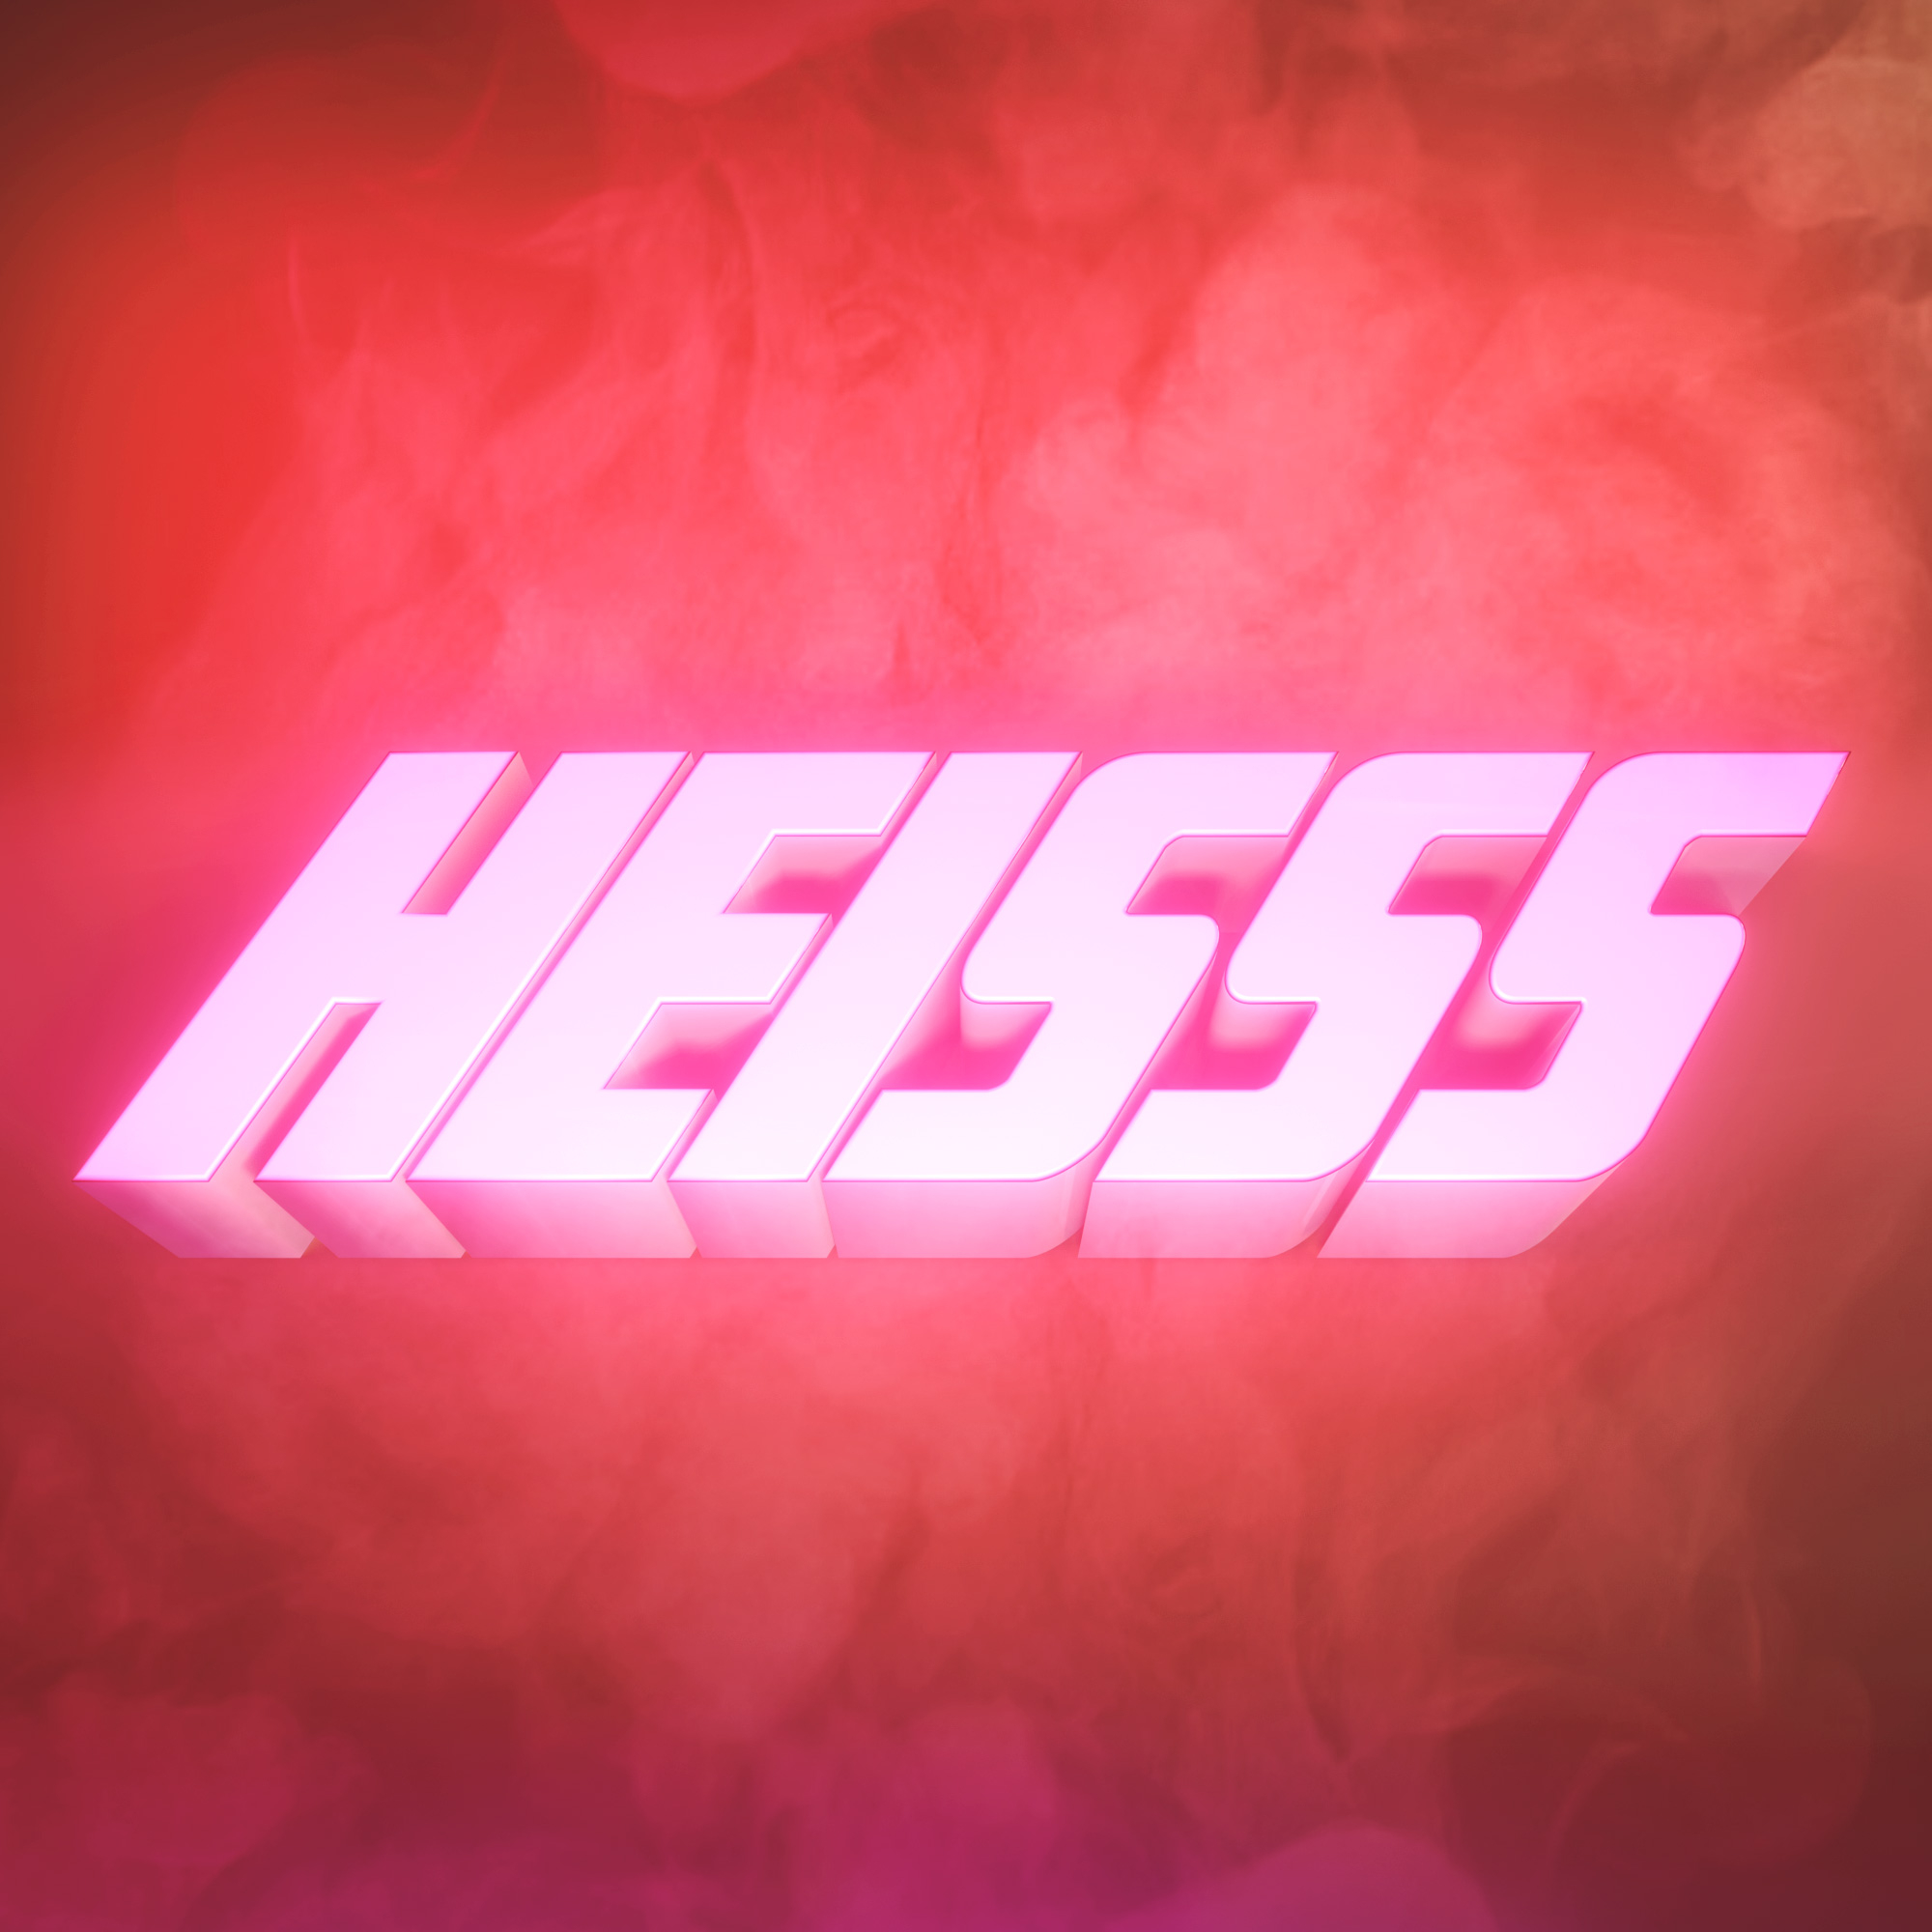 HEISSS - Flyer front